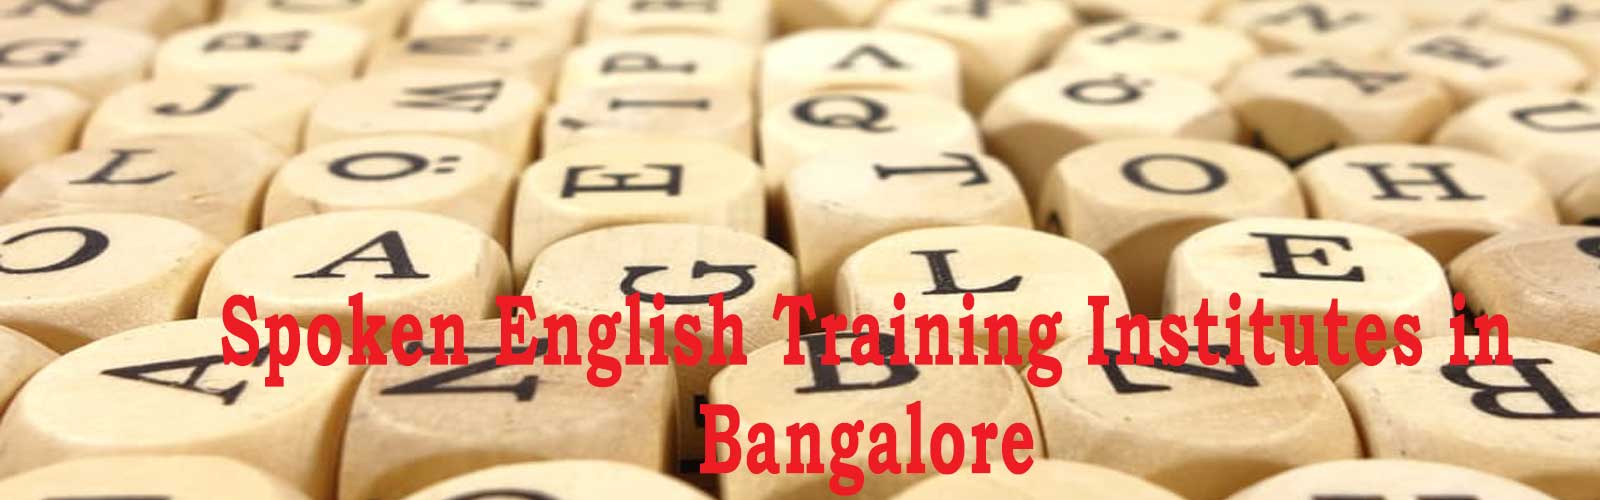 Spoken-English-Training-Institutes-in-Bangalore